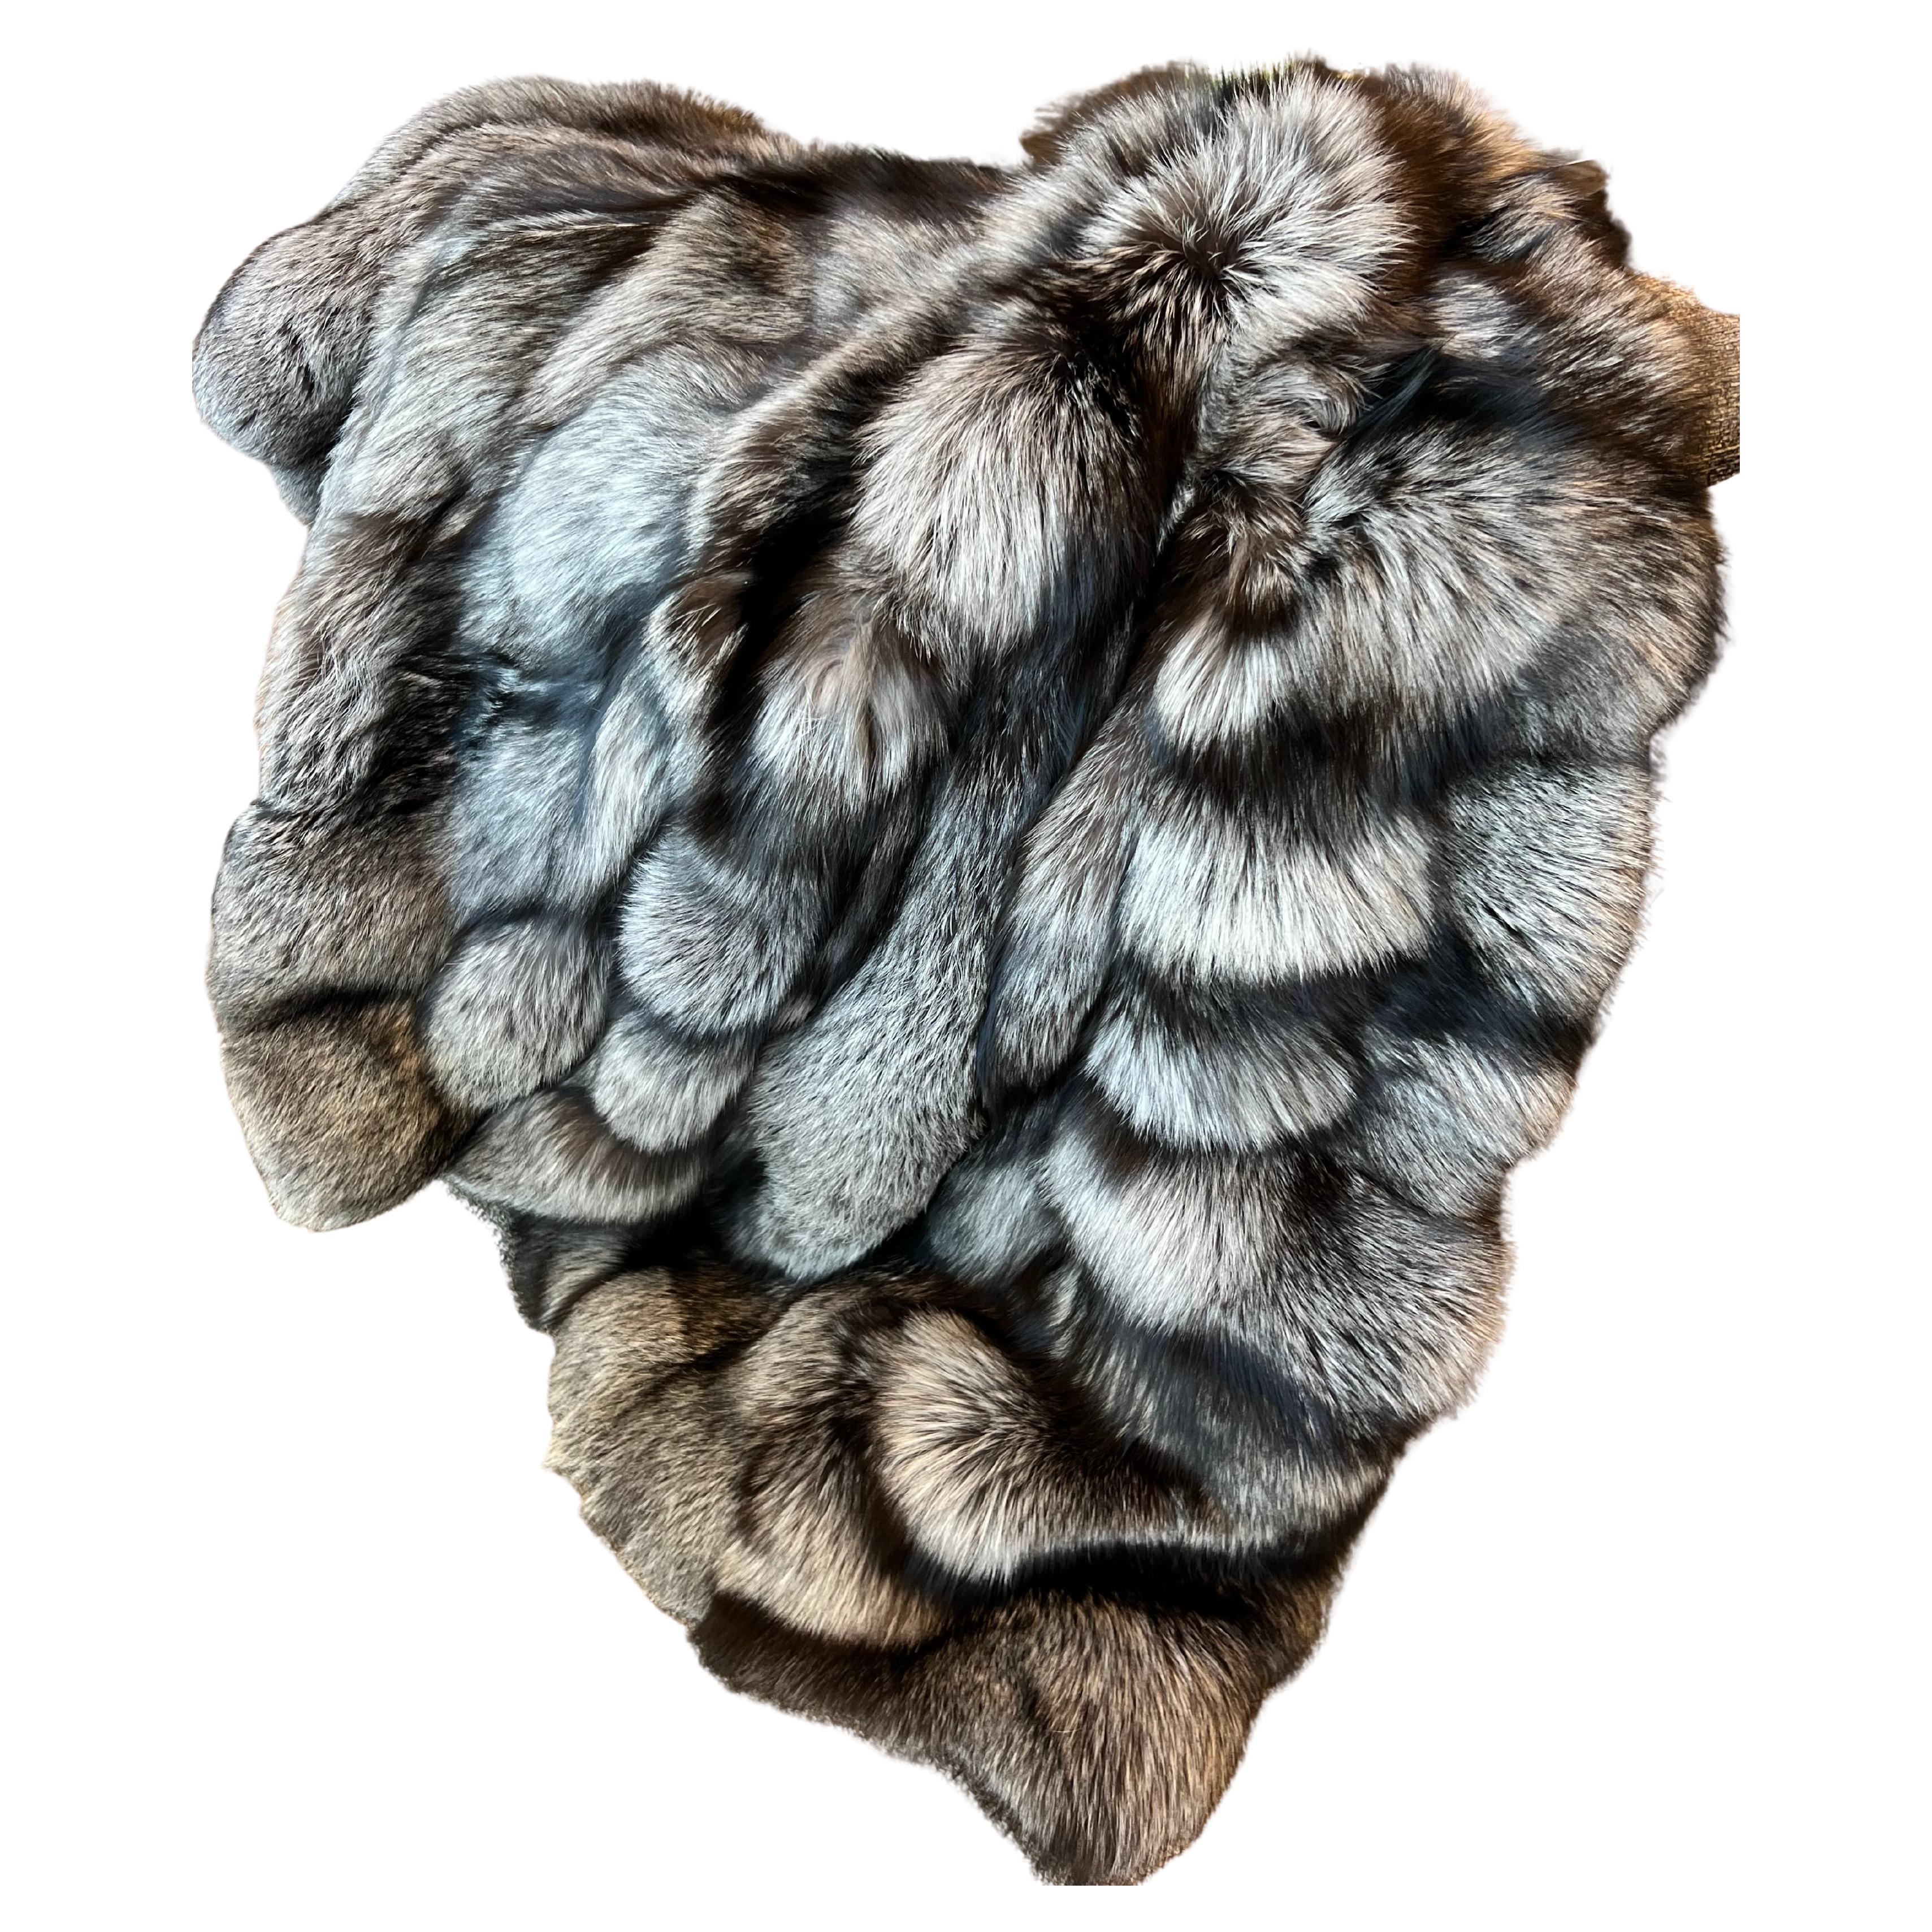 Silver Fox Fur Throw - 4 For Sale on 1stDibs